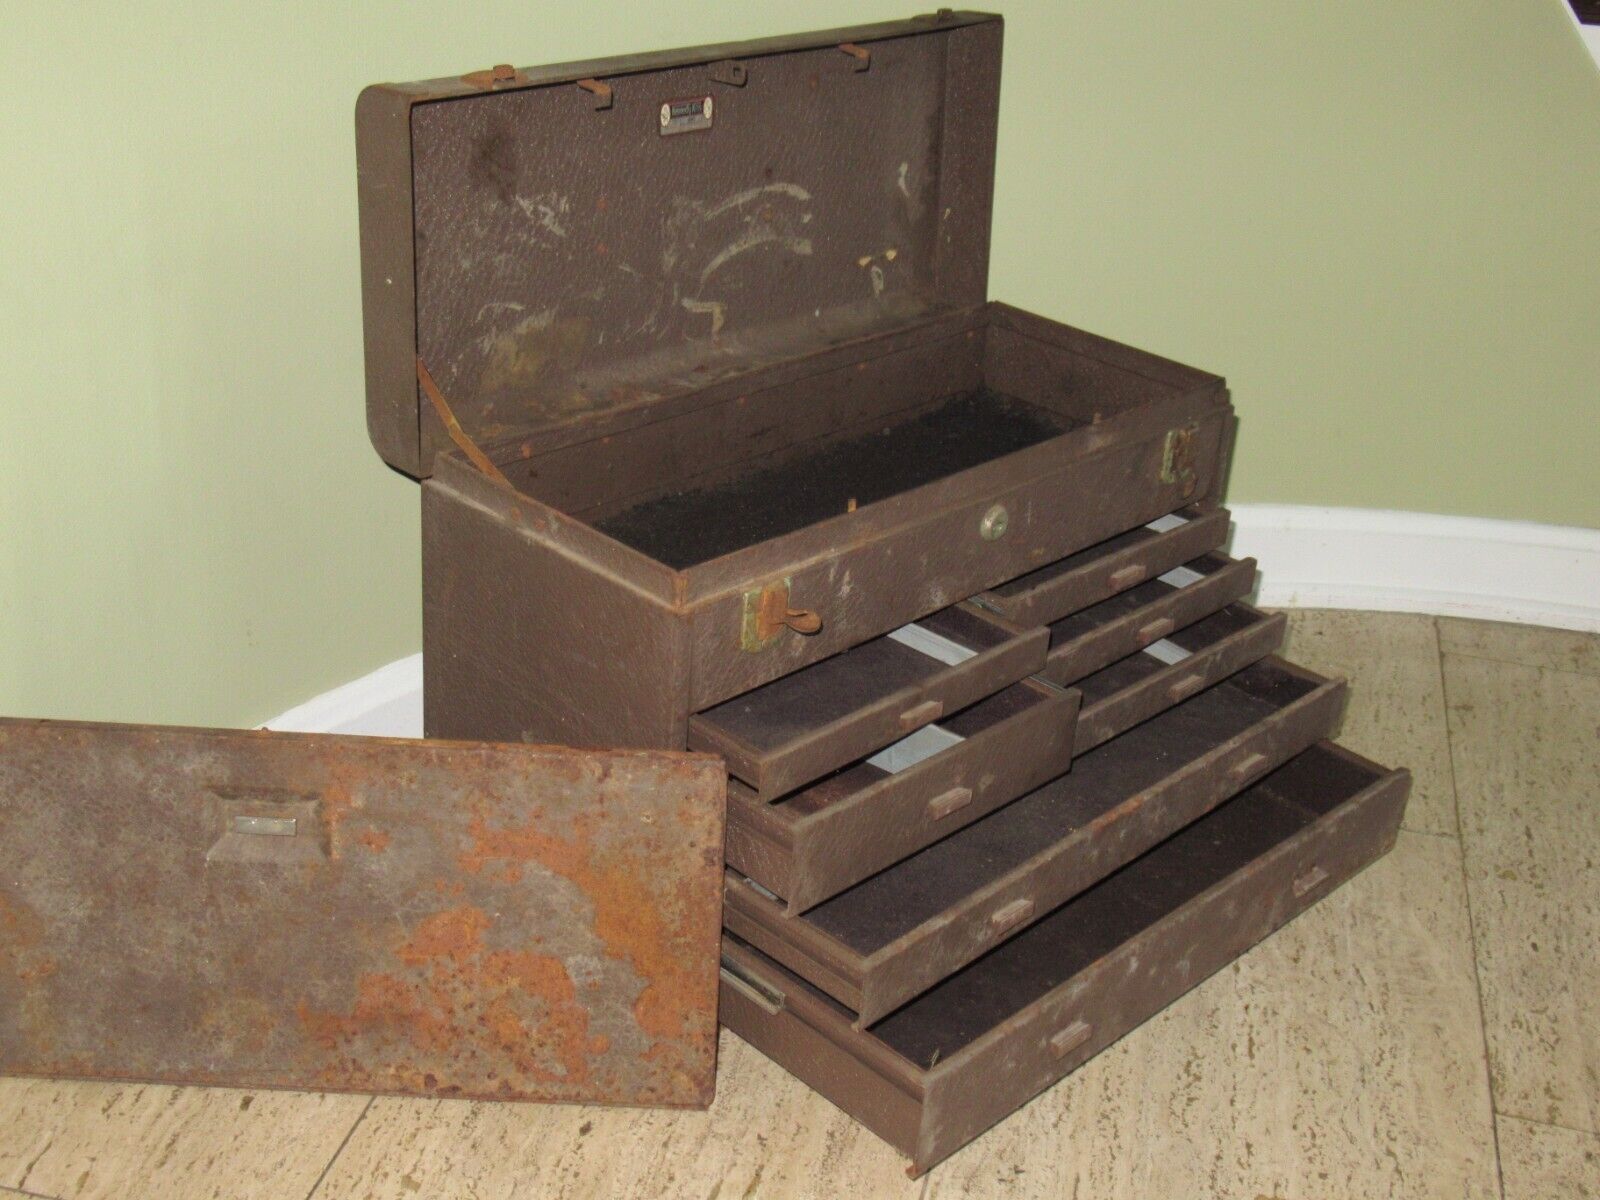 Vintage KENNEDY KITS 520 Machinist Tool Box 7 Drawer Rough in Ashland Ohio Rusty